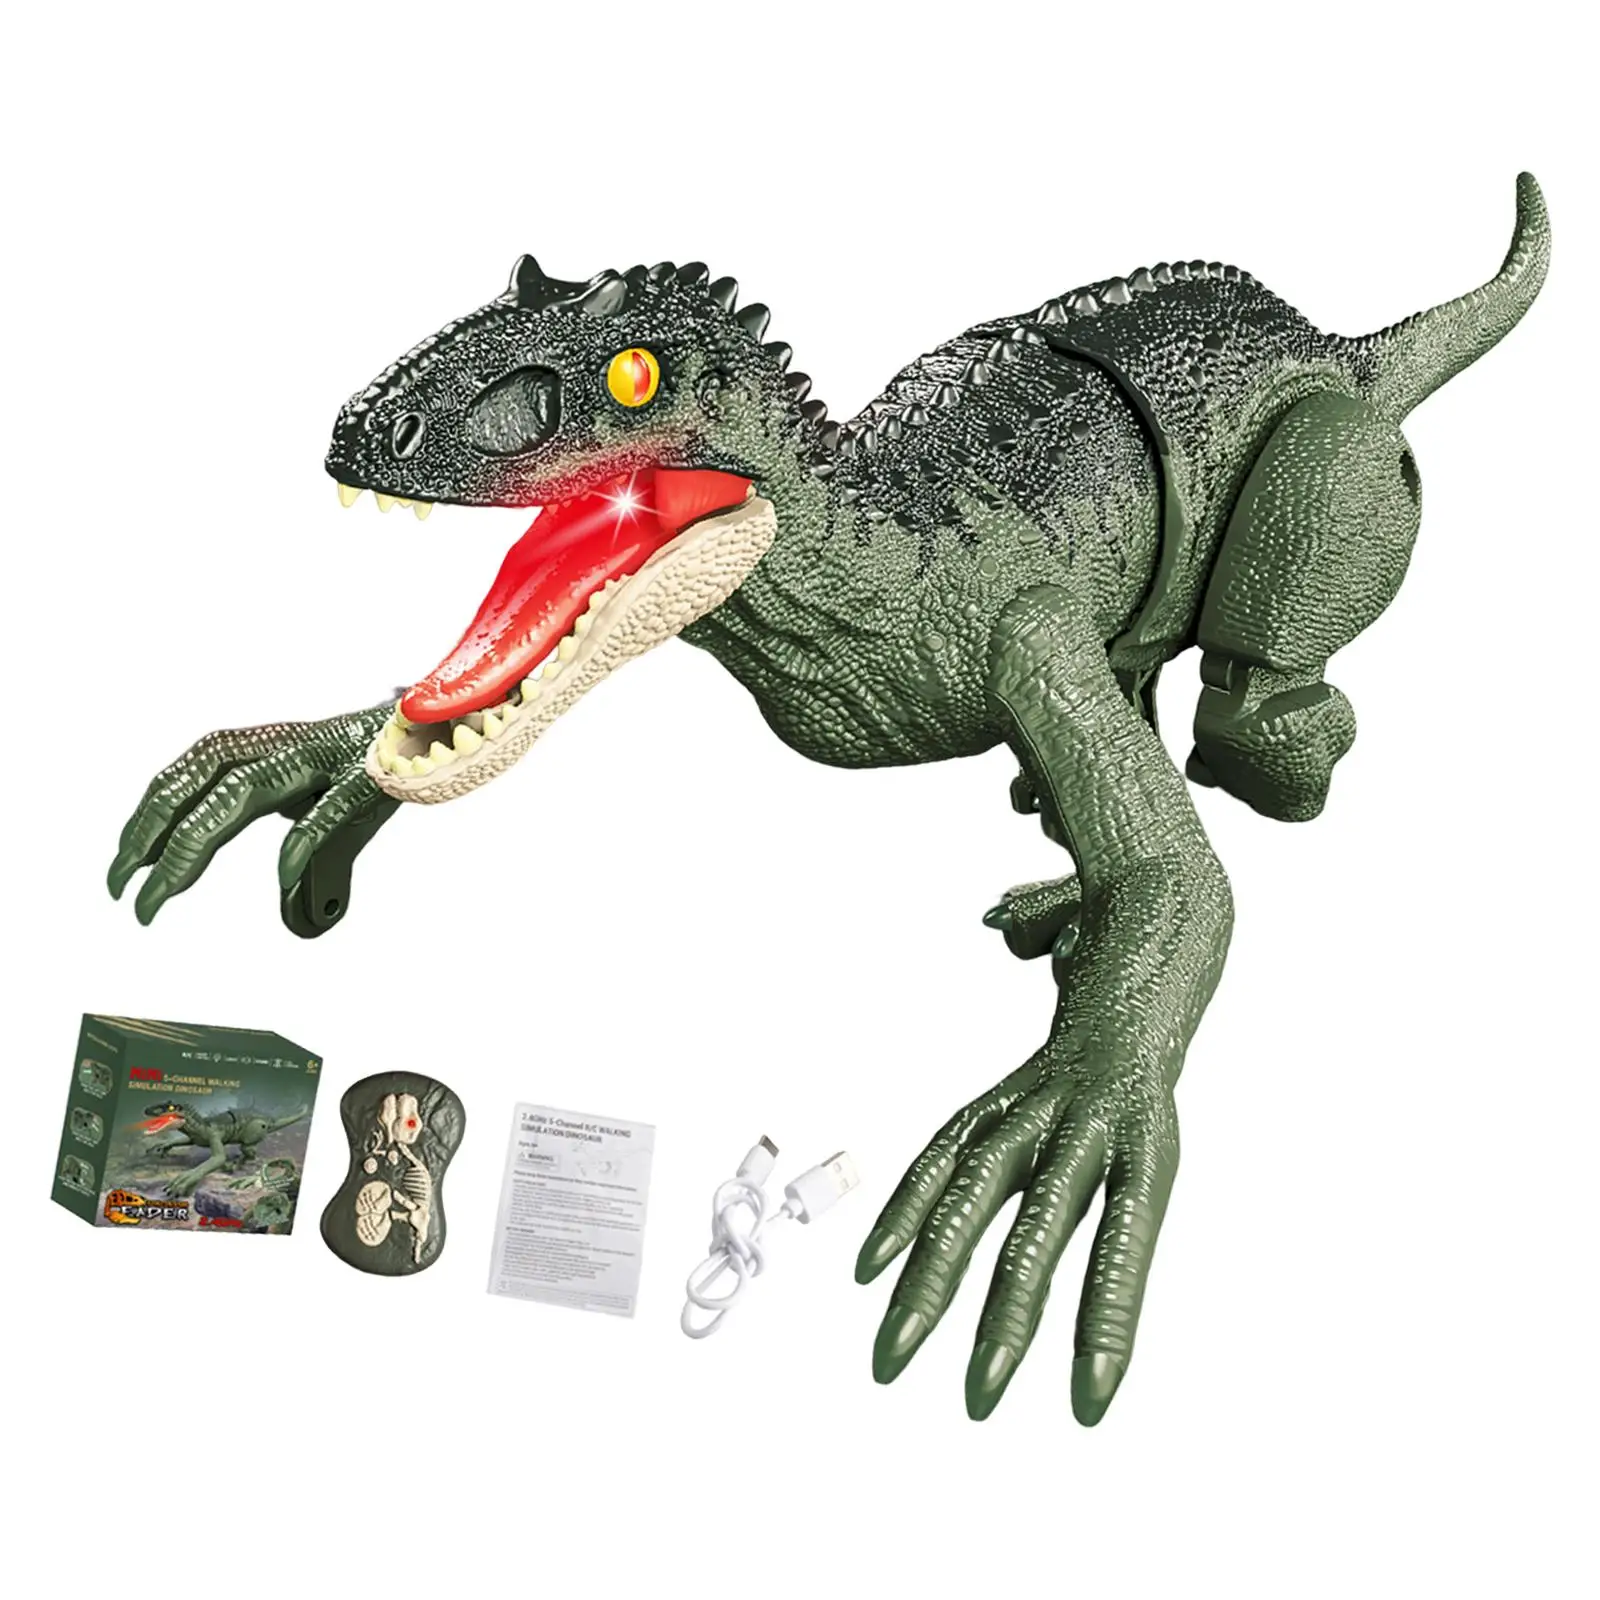 Robot Dinosaur Walking Dinosaur Toys Remote Controlled Dinosaur Play Dinosaur Toy for Girls Children Kids Boys Birthday Gifts